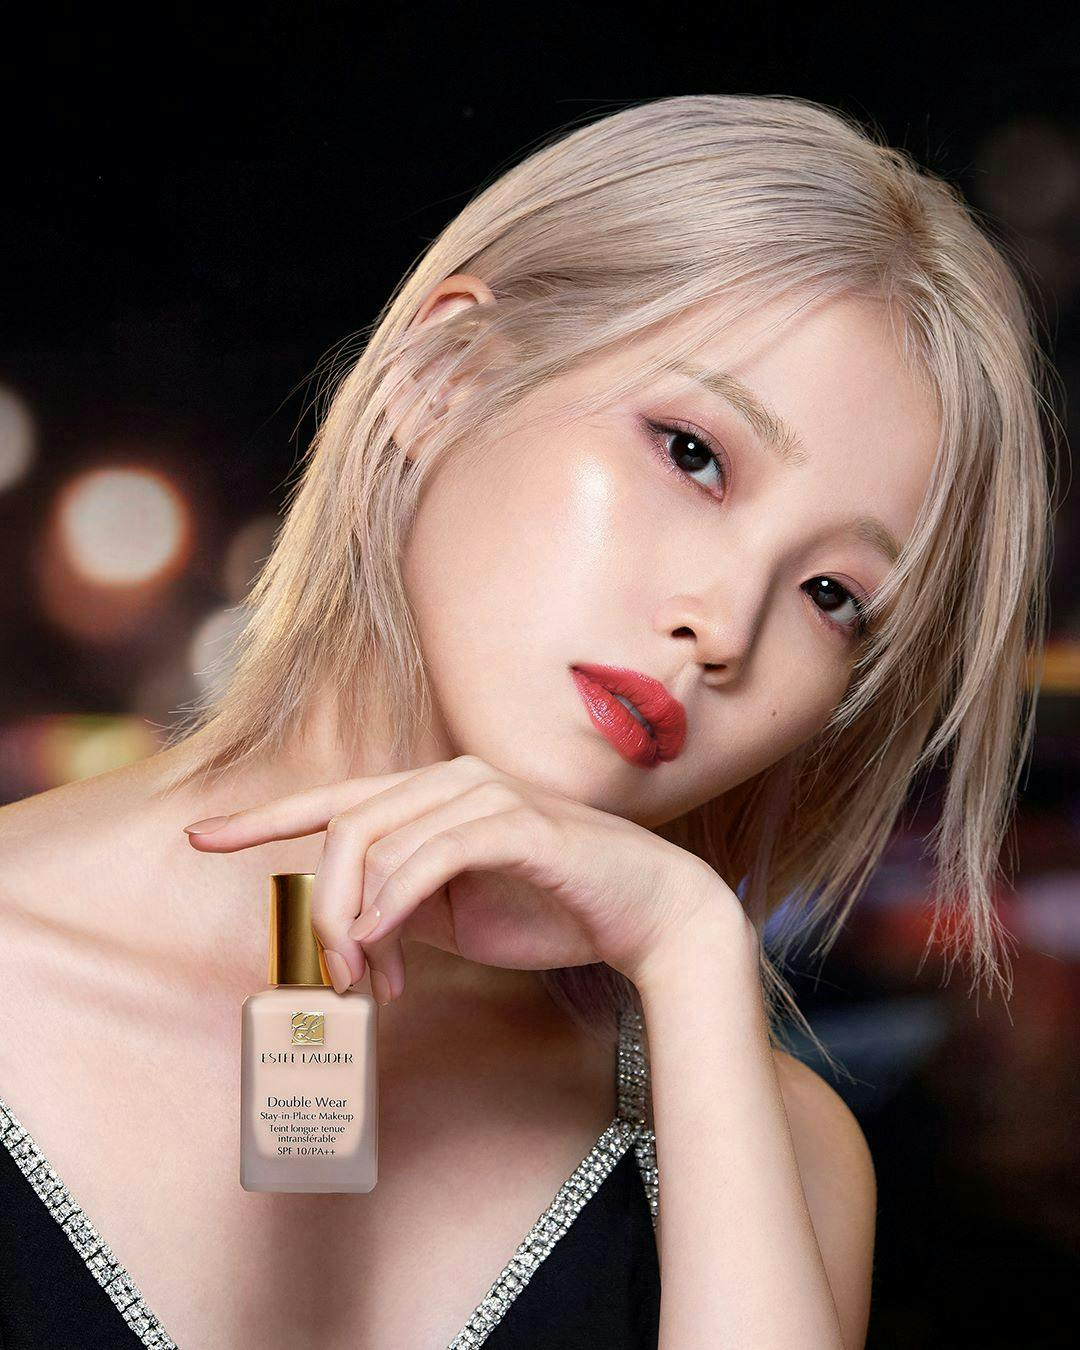 bottle cosmetics perfume blonde hair person